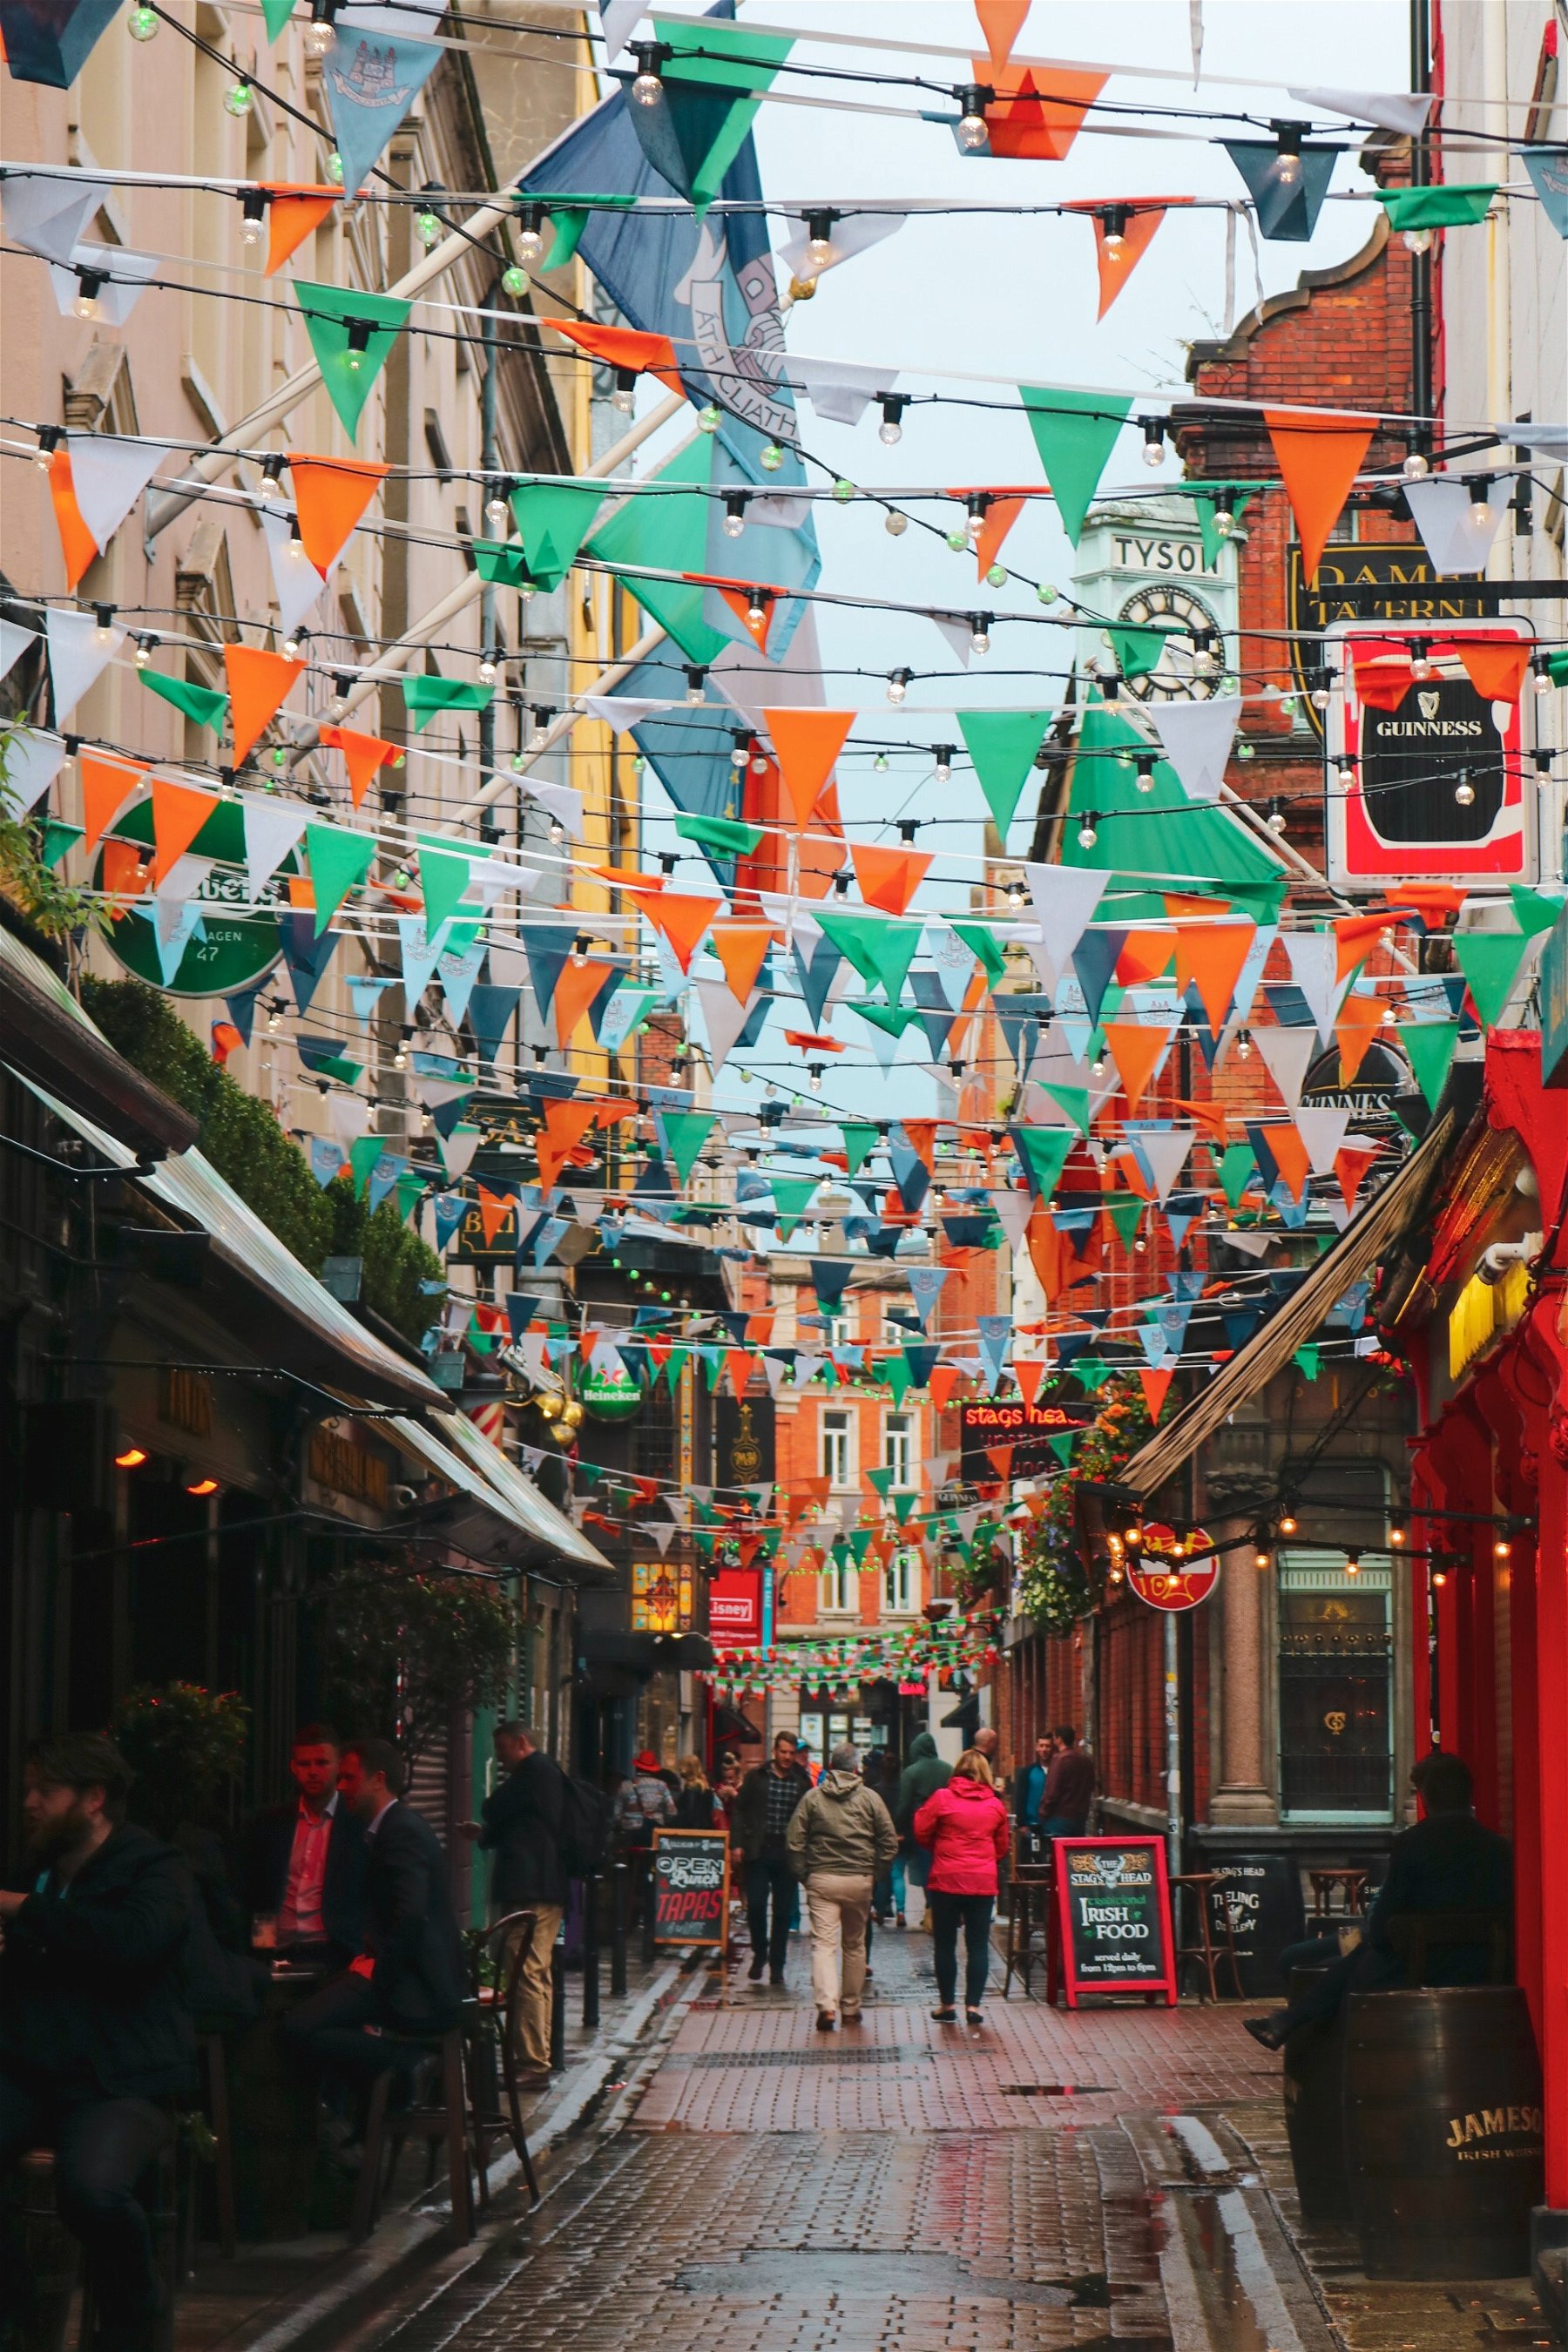 Exploring the Gaelic Heritage: Irish Language and Culture for International Students